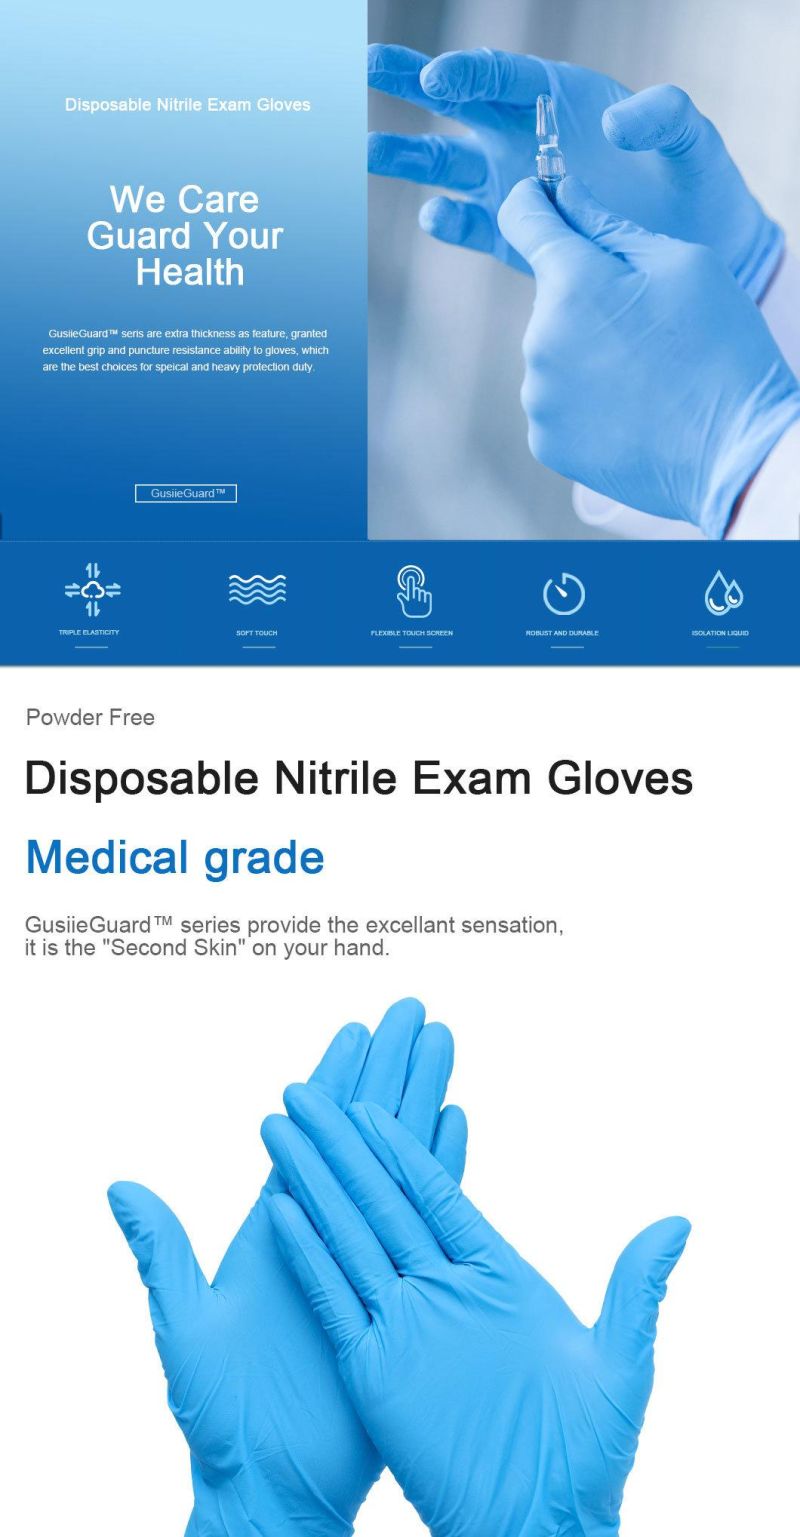 Cheap Price 100PCS Box Disposable Blue Safety Nitrile Examination Gloves